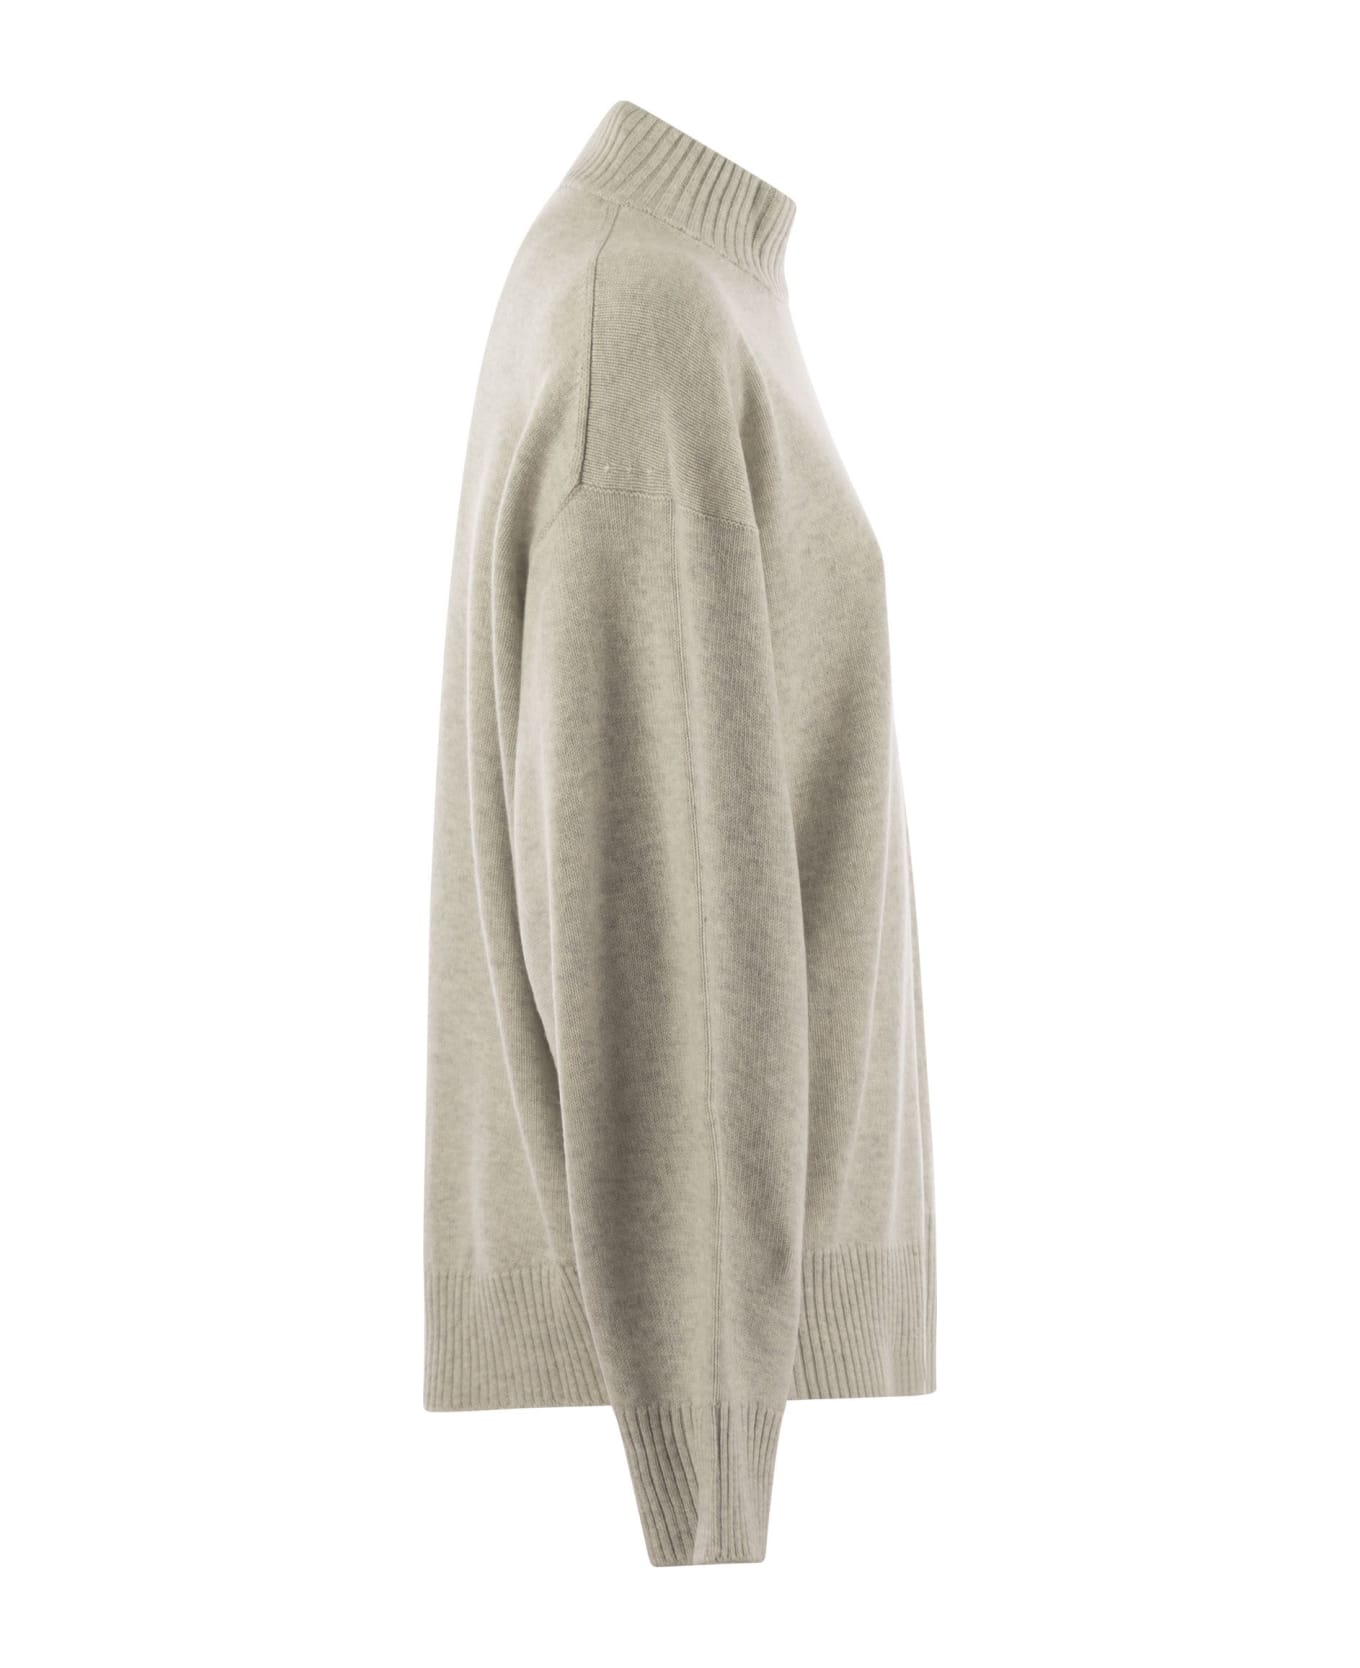 Brunello Cucinelli Cashmere Chimney Neck Sweater With Shiny Cuff Details - Light Grey ニットウェア